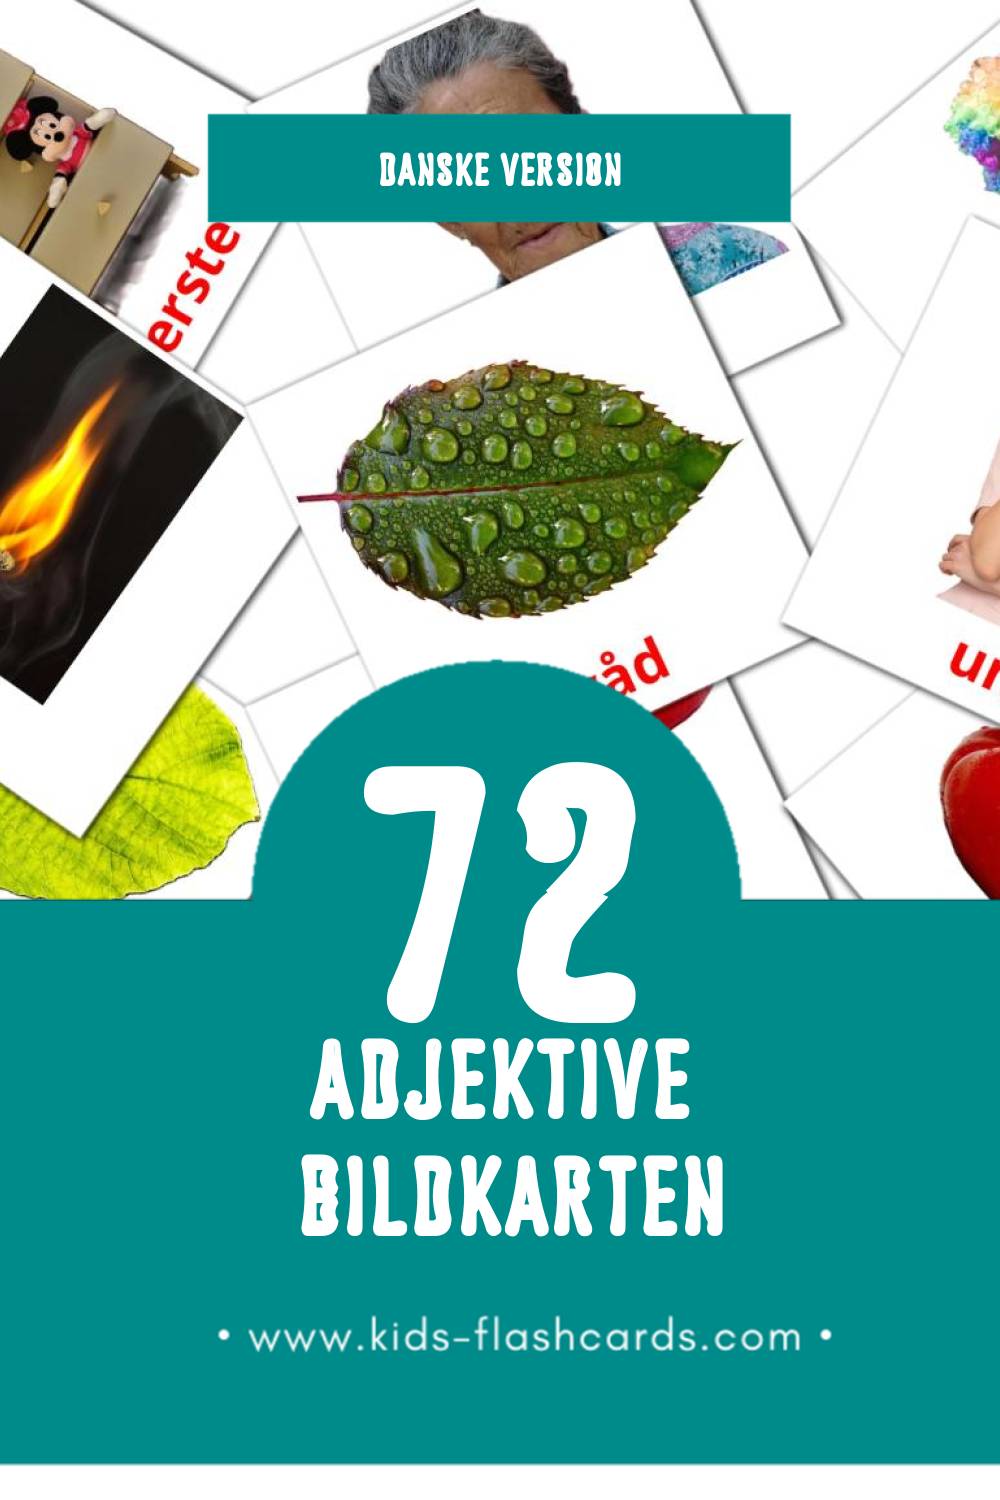 Visual Adjektiv (Tillægsord) Flashcards für Kleinkinder (72 Karten in Dansk)